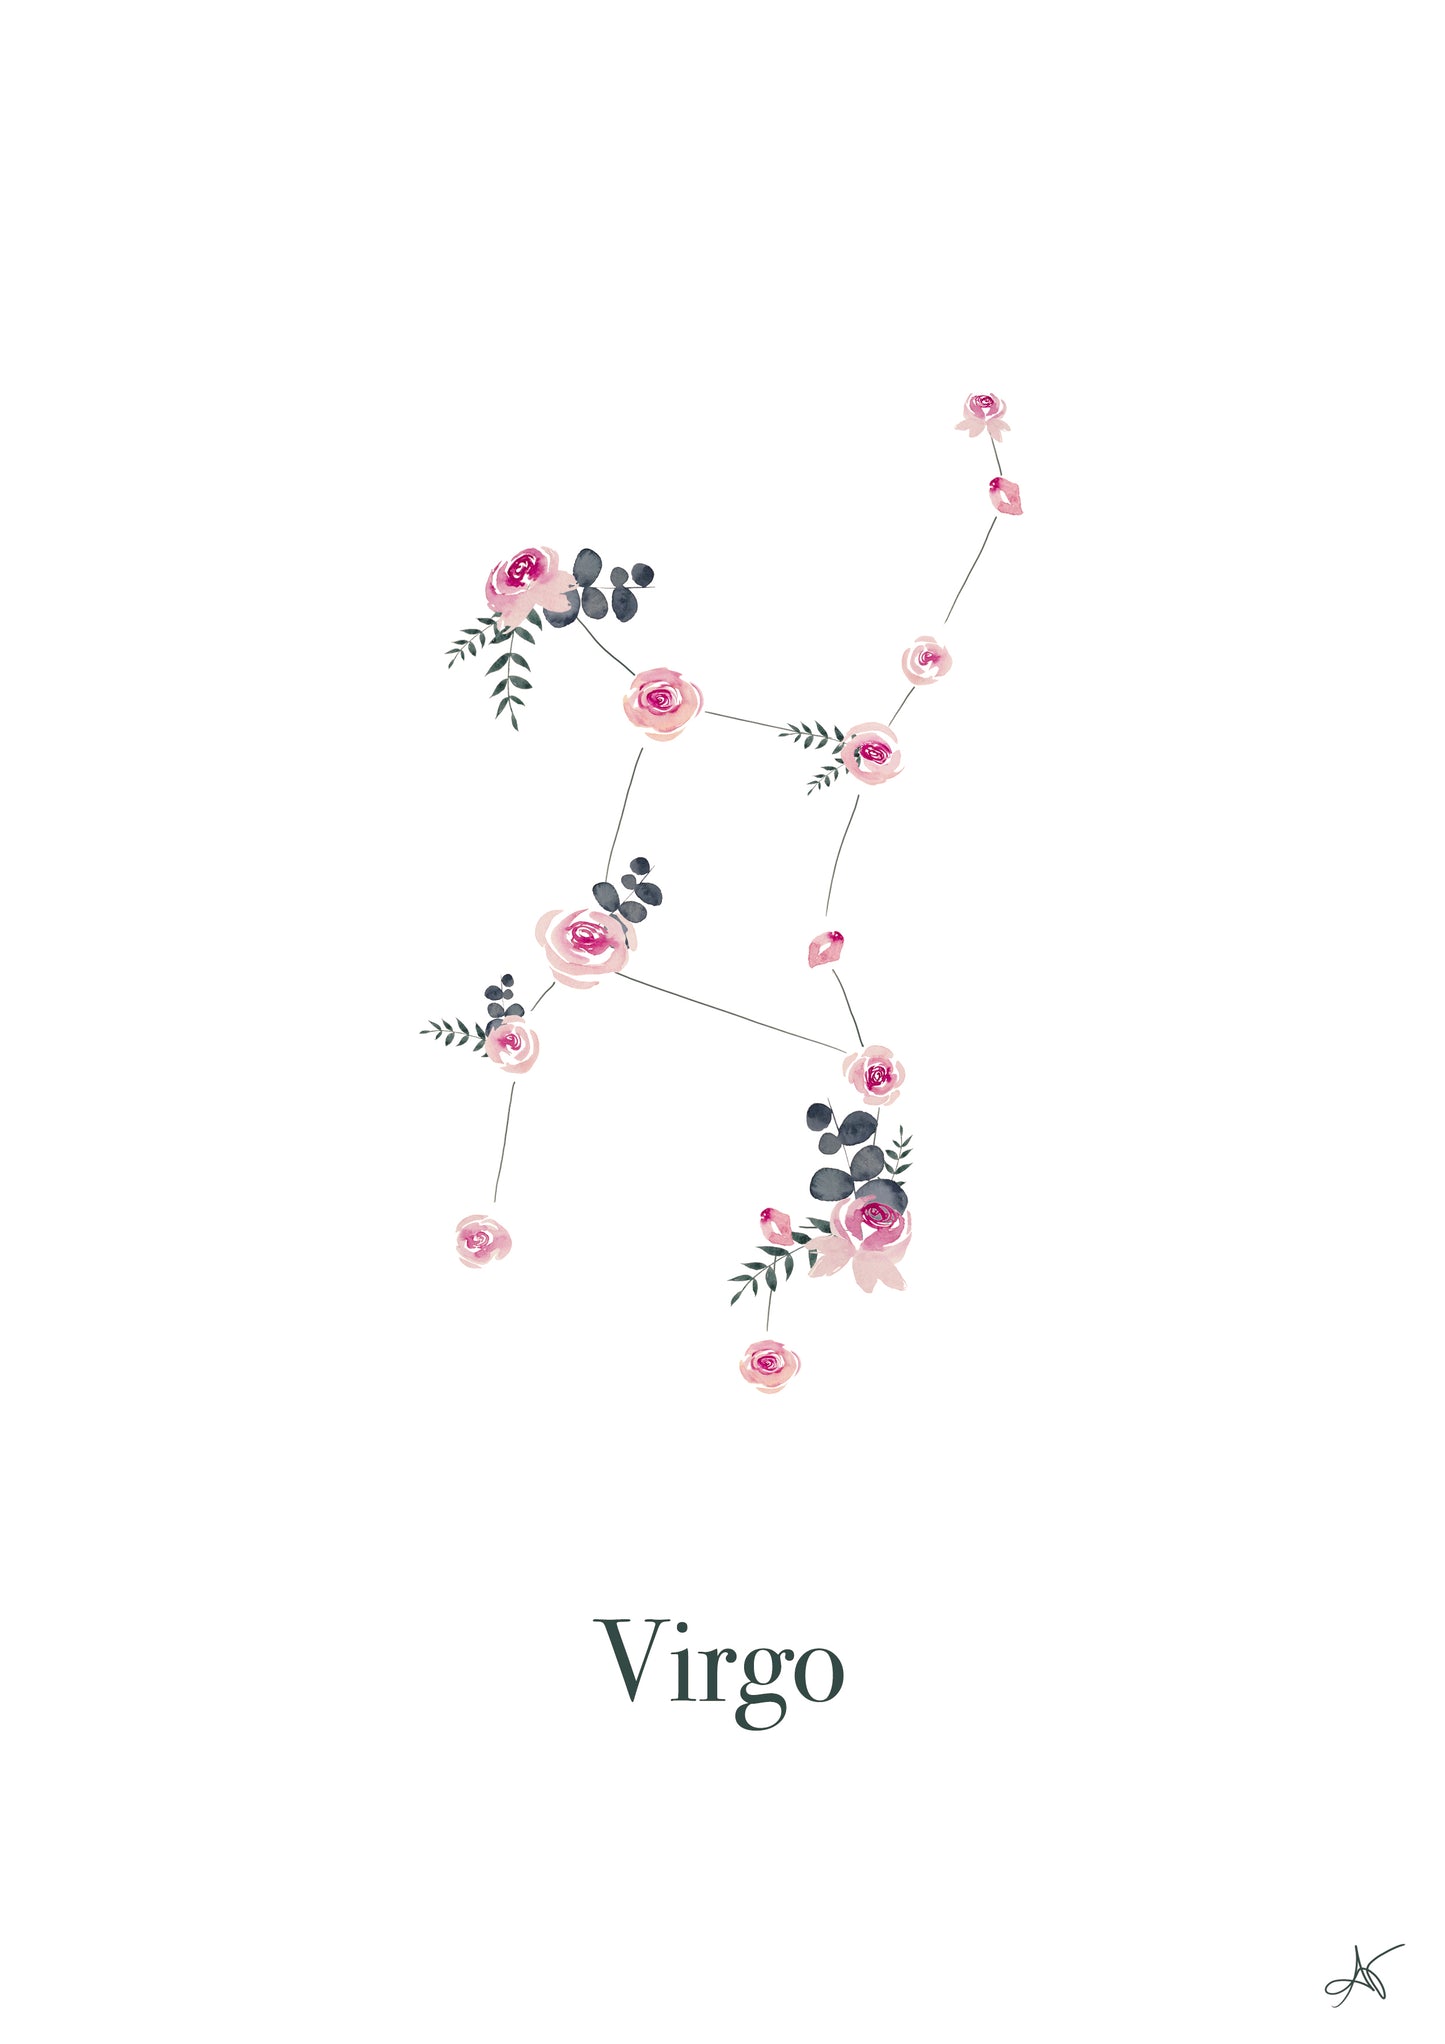 "Virgo" - Roses